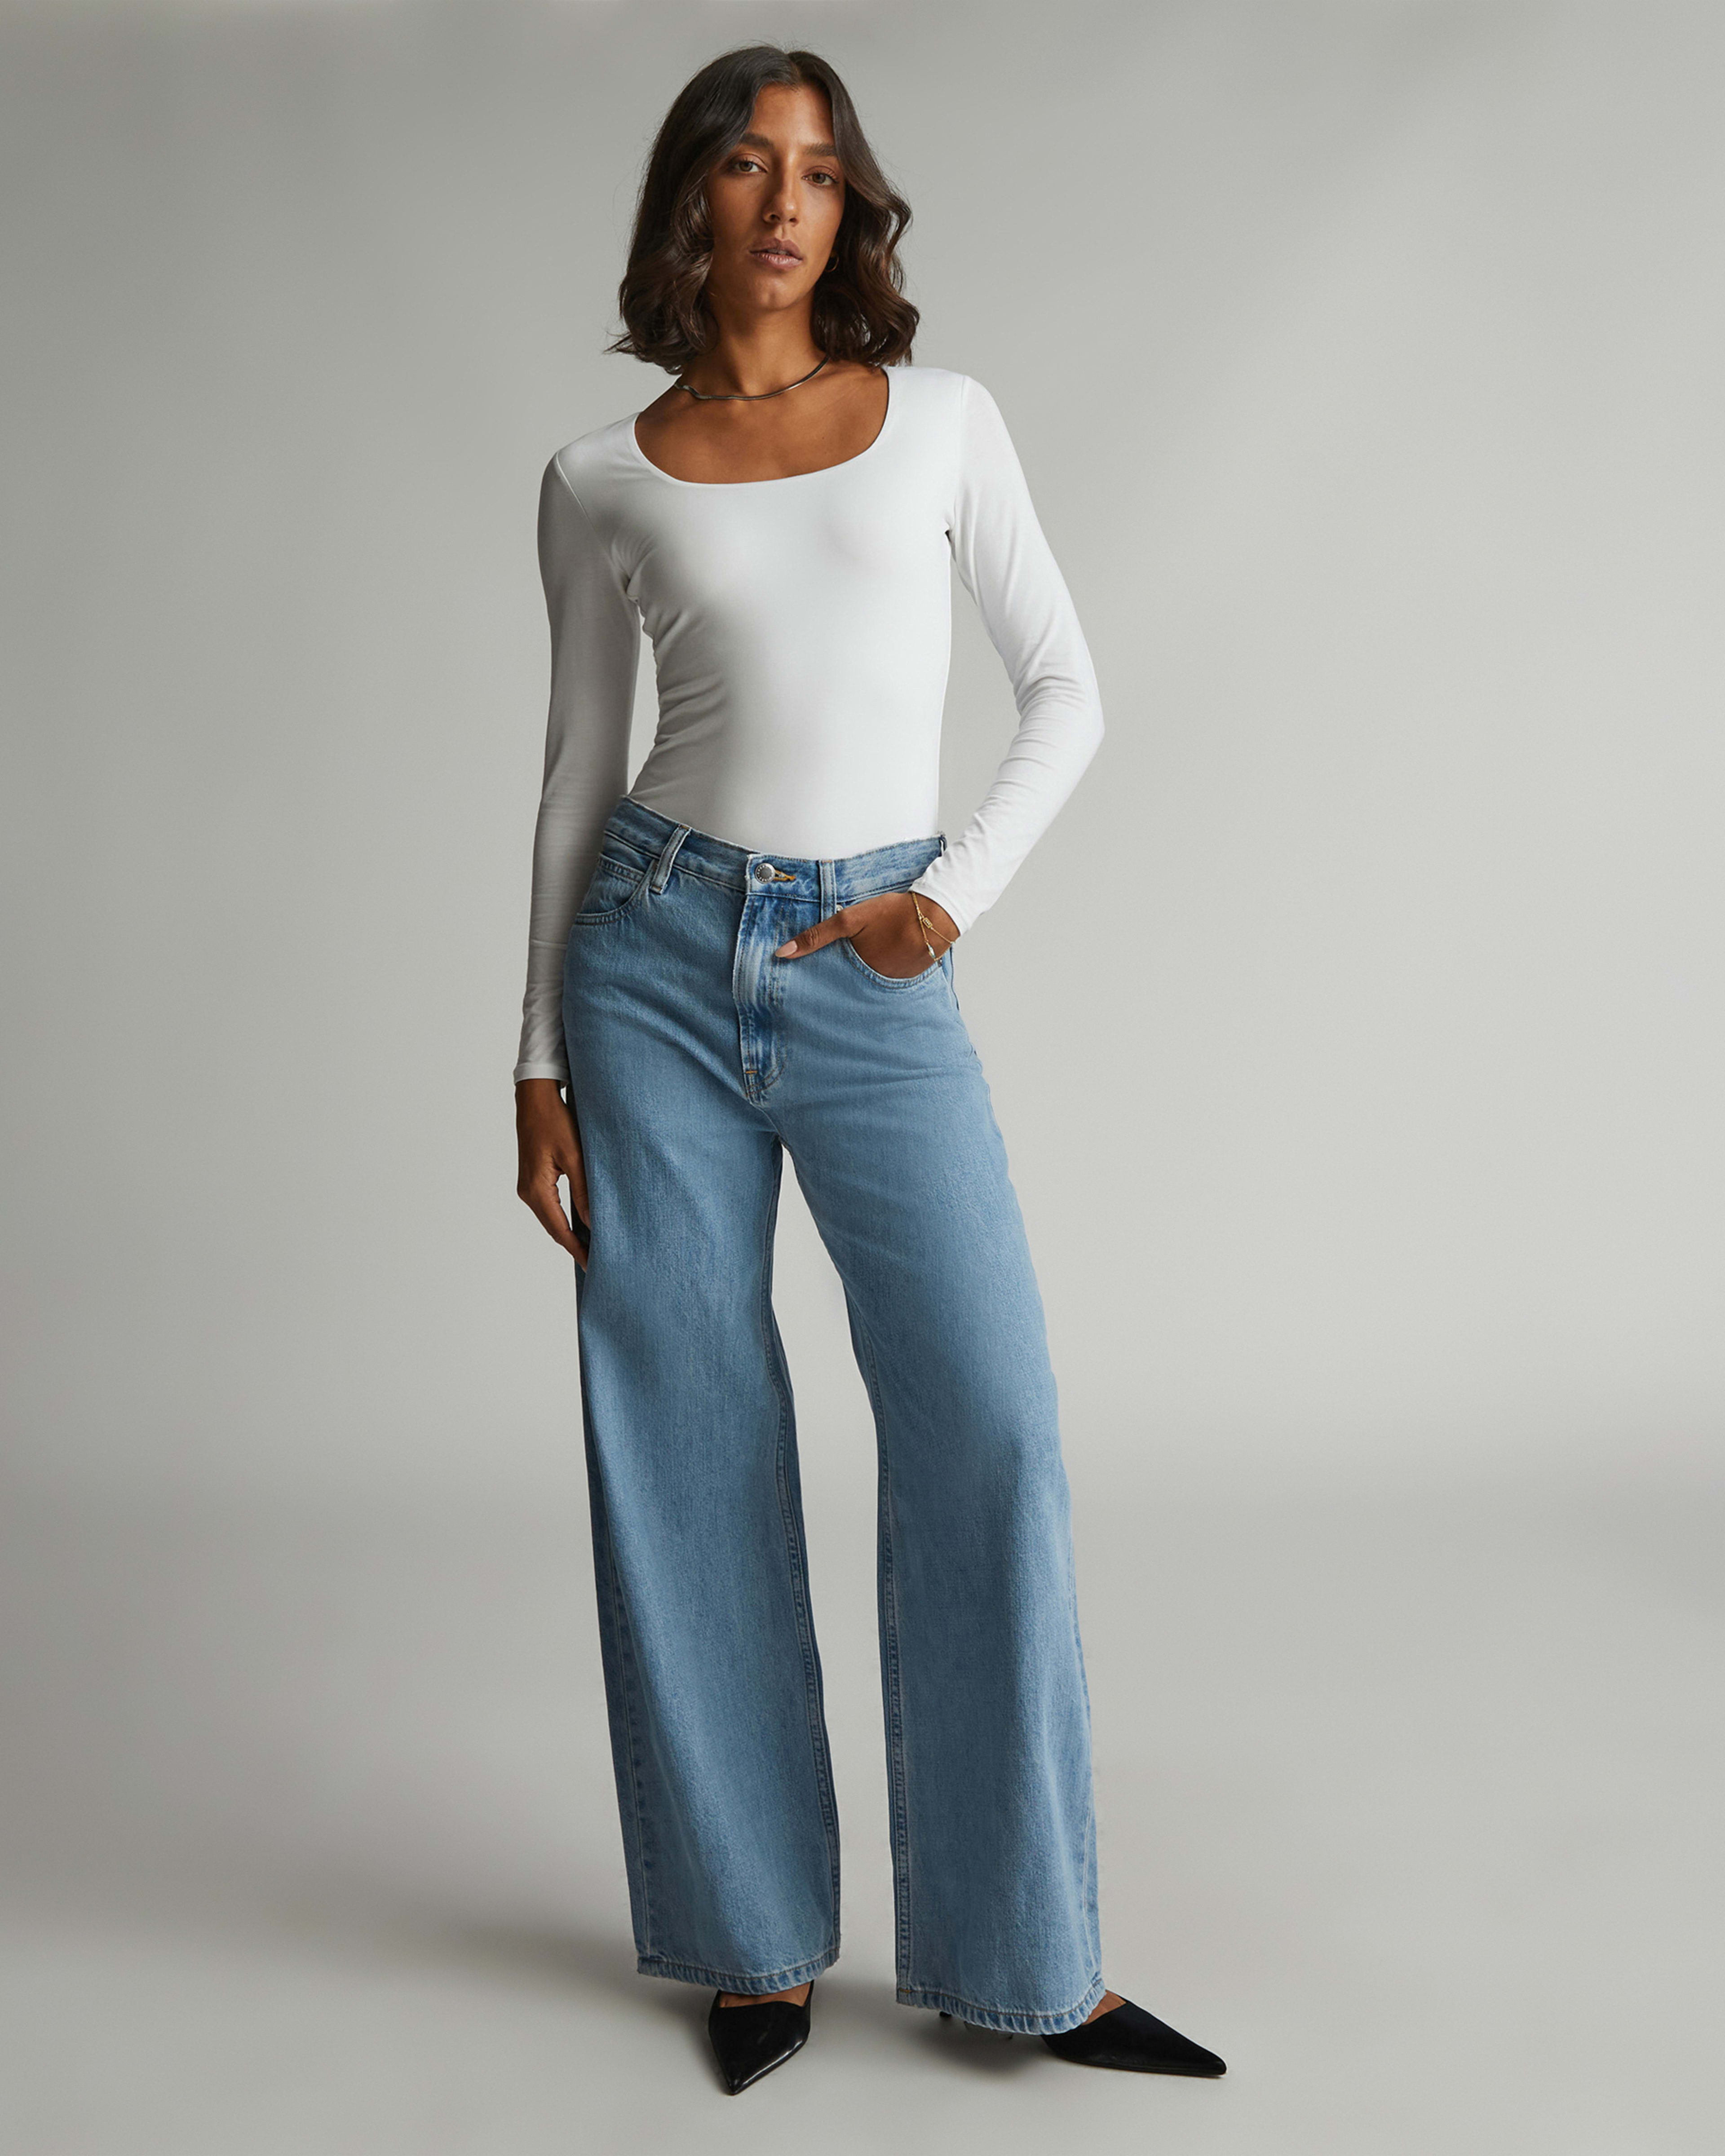 Womens White Squareneck Long Sleeve Bodysuit S, M, L, XL